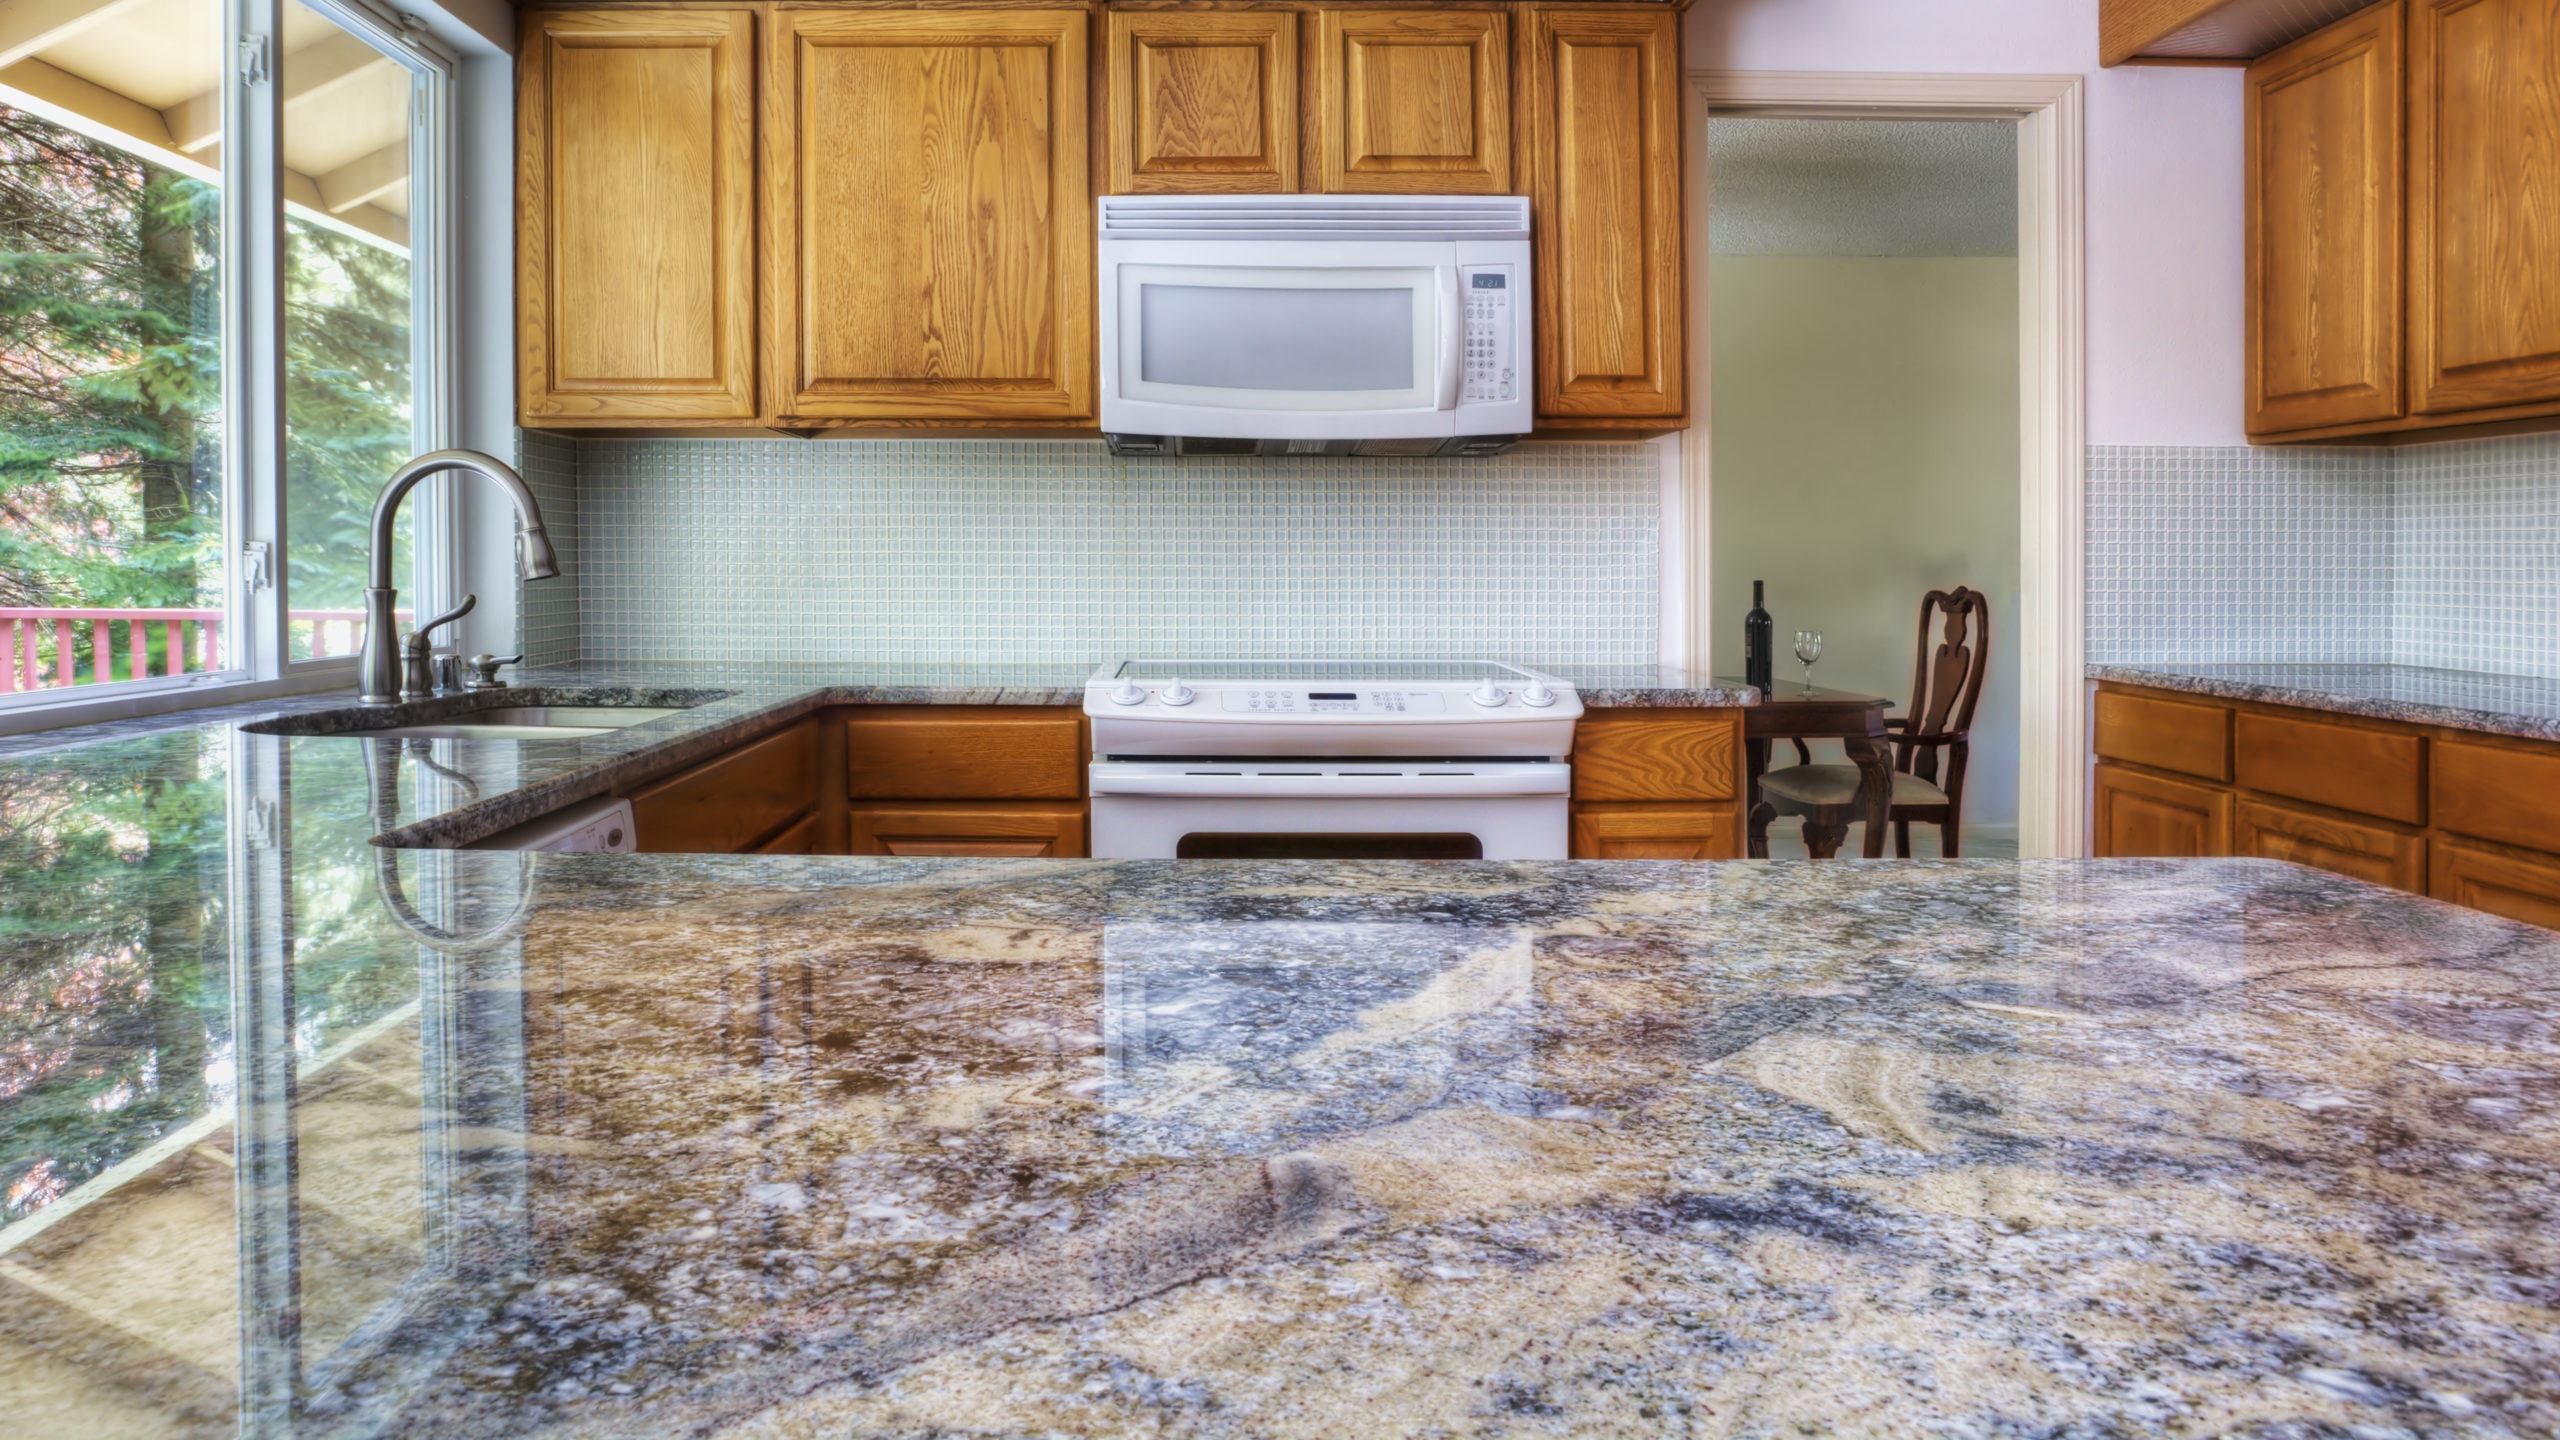 Granite counter reflecting kitchen cabinets